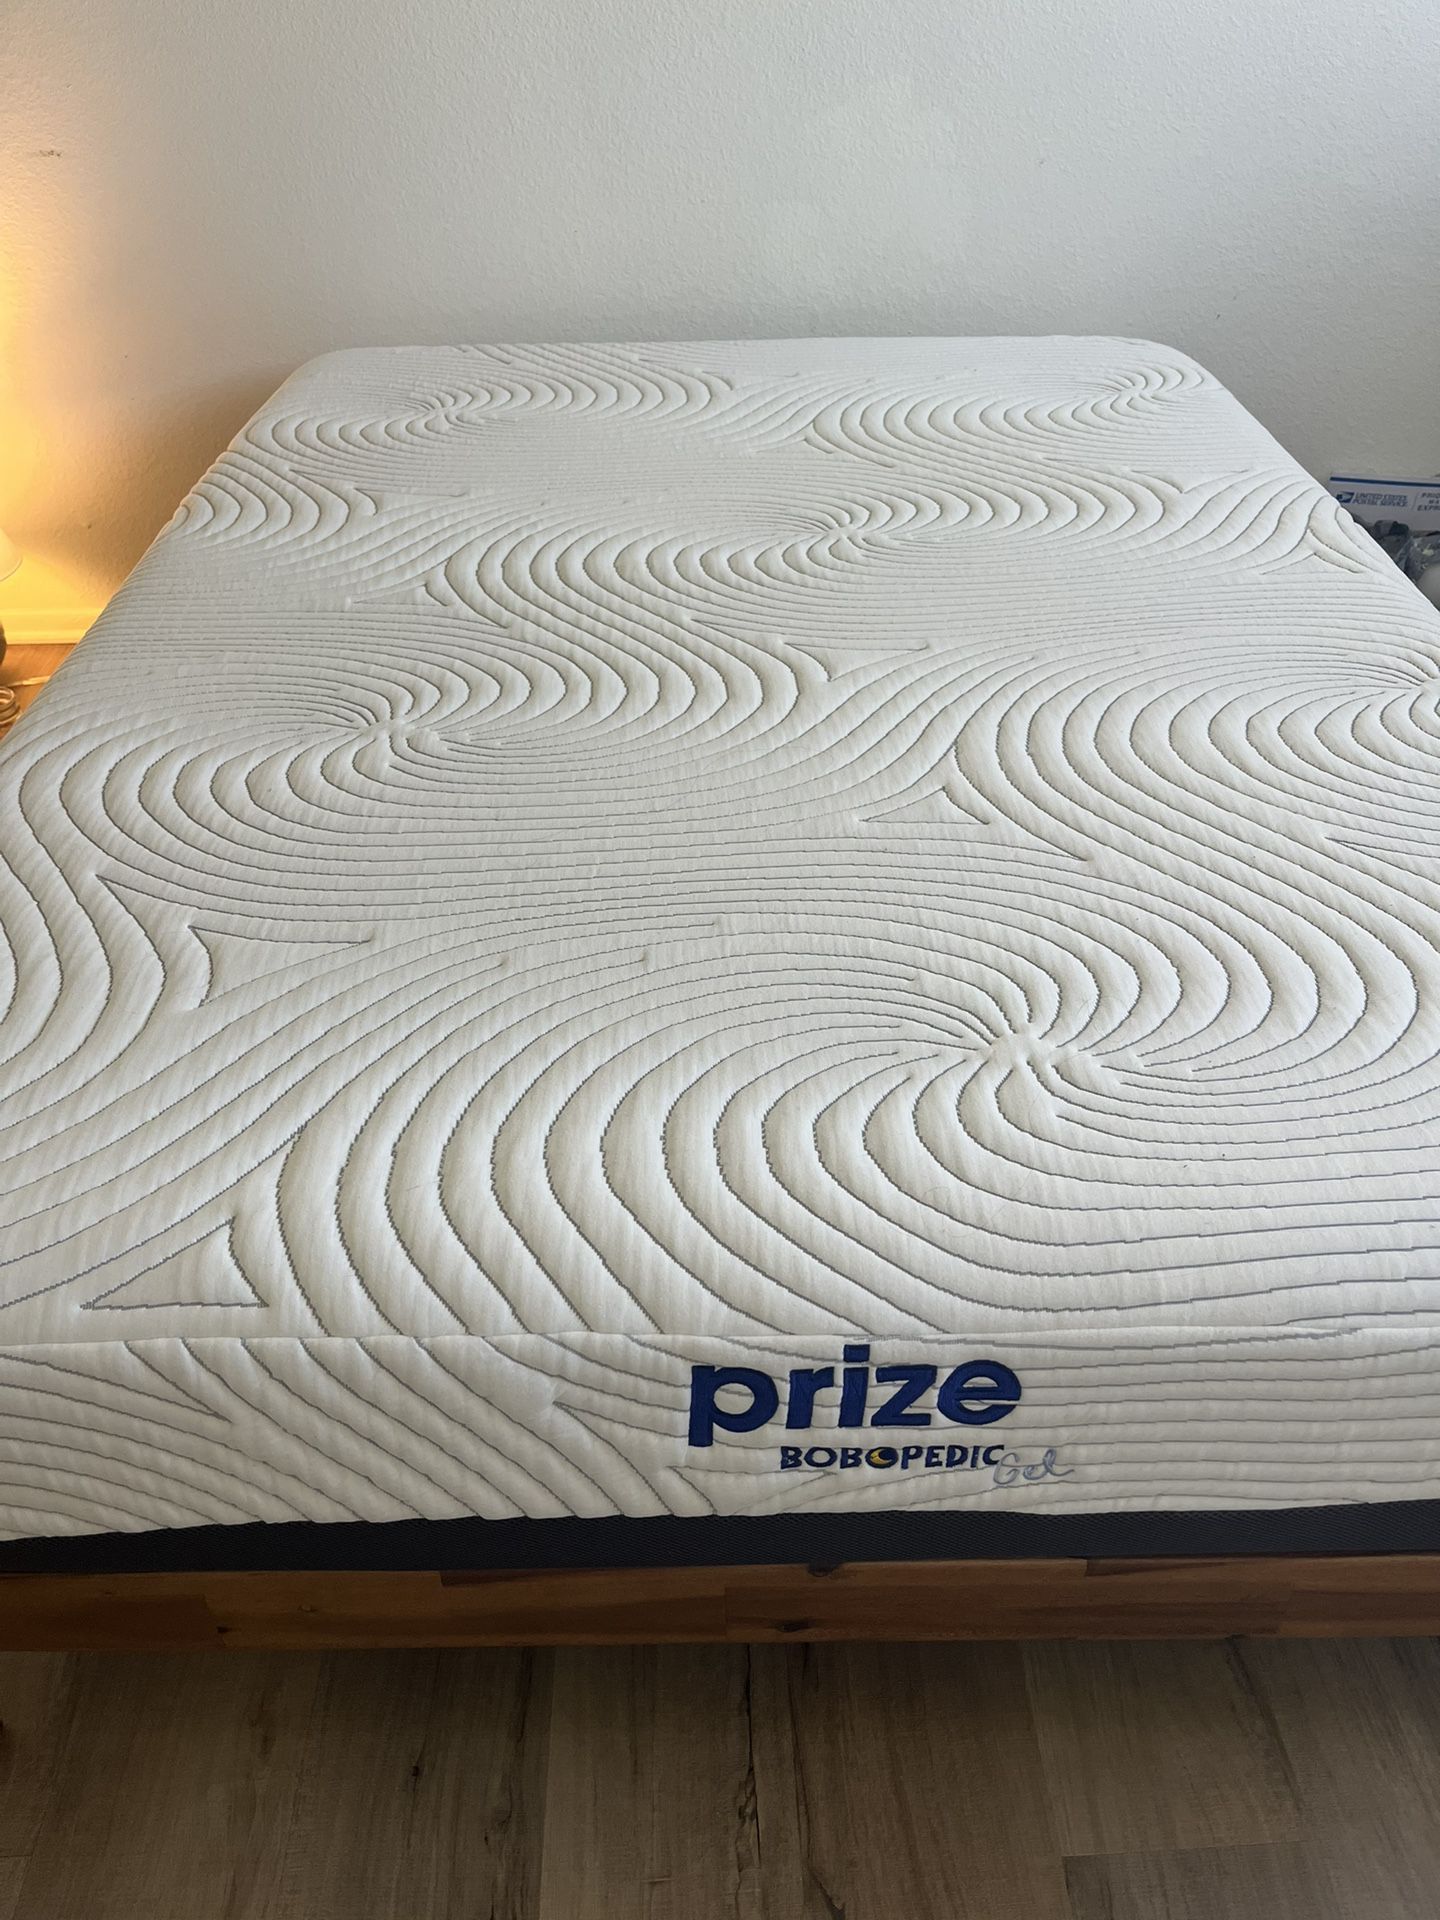 FULL SIZE mattress + frame